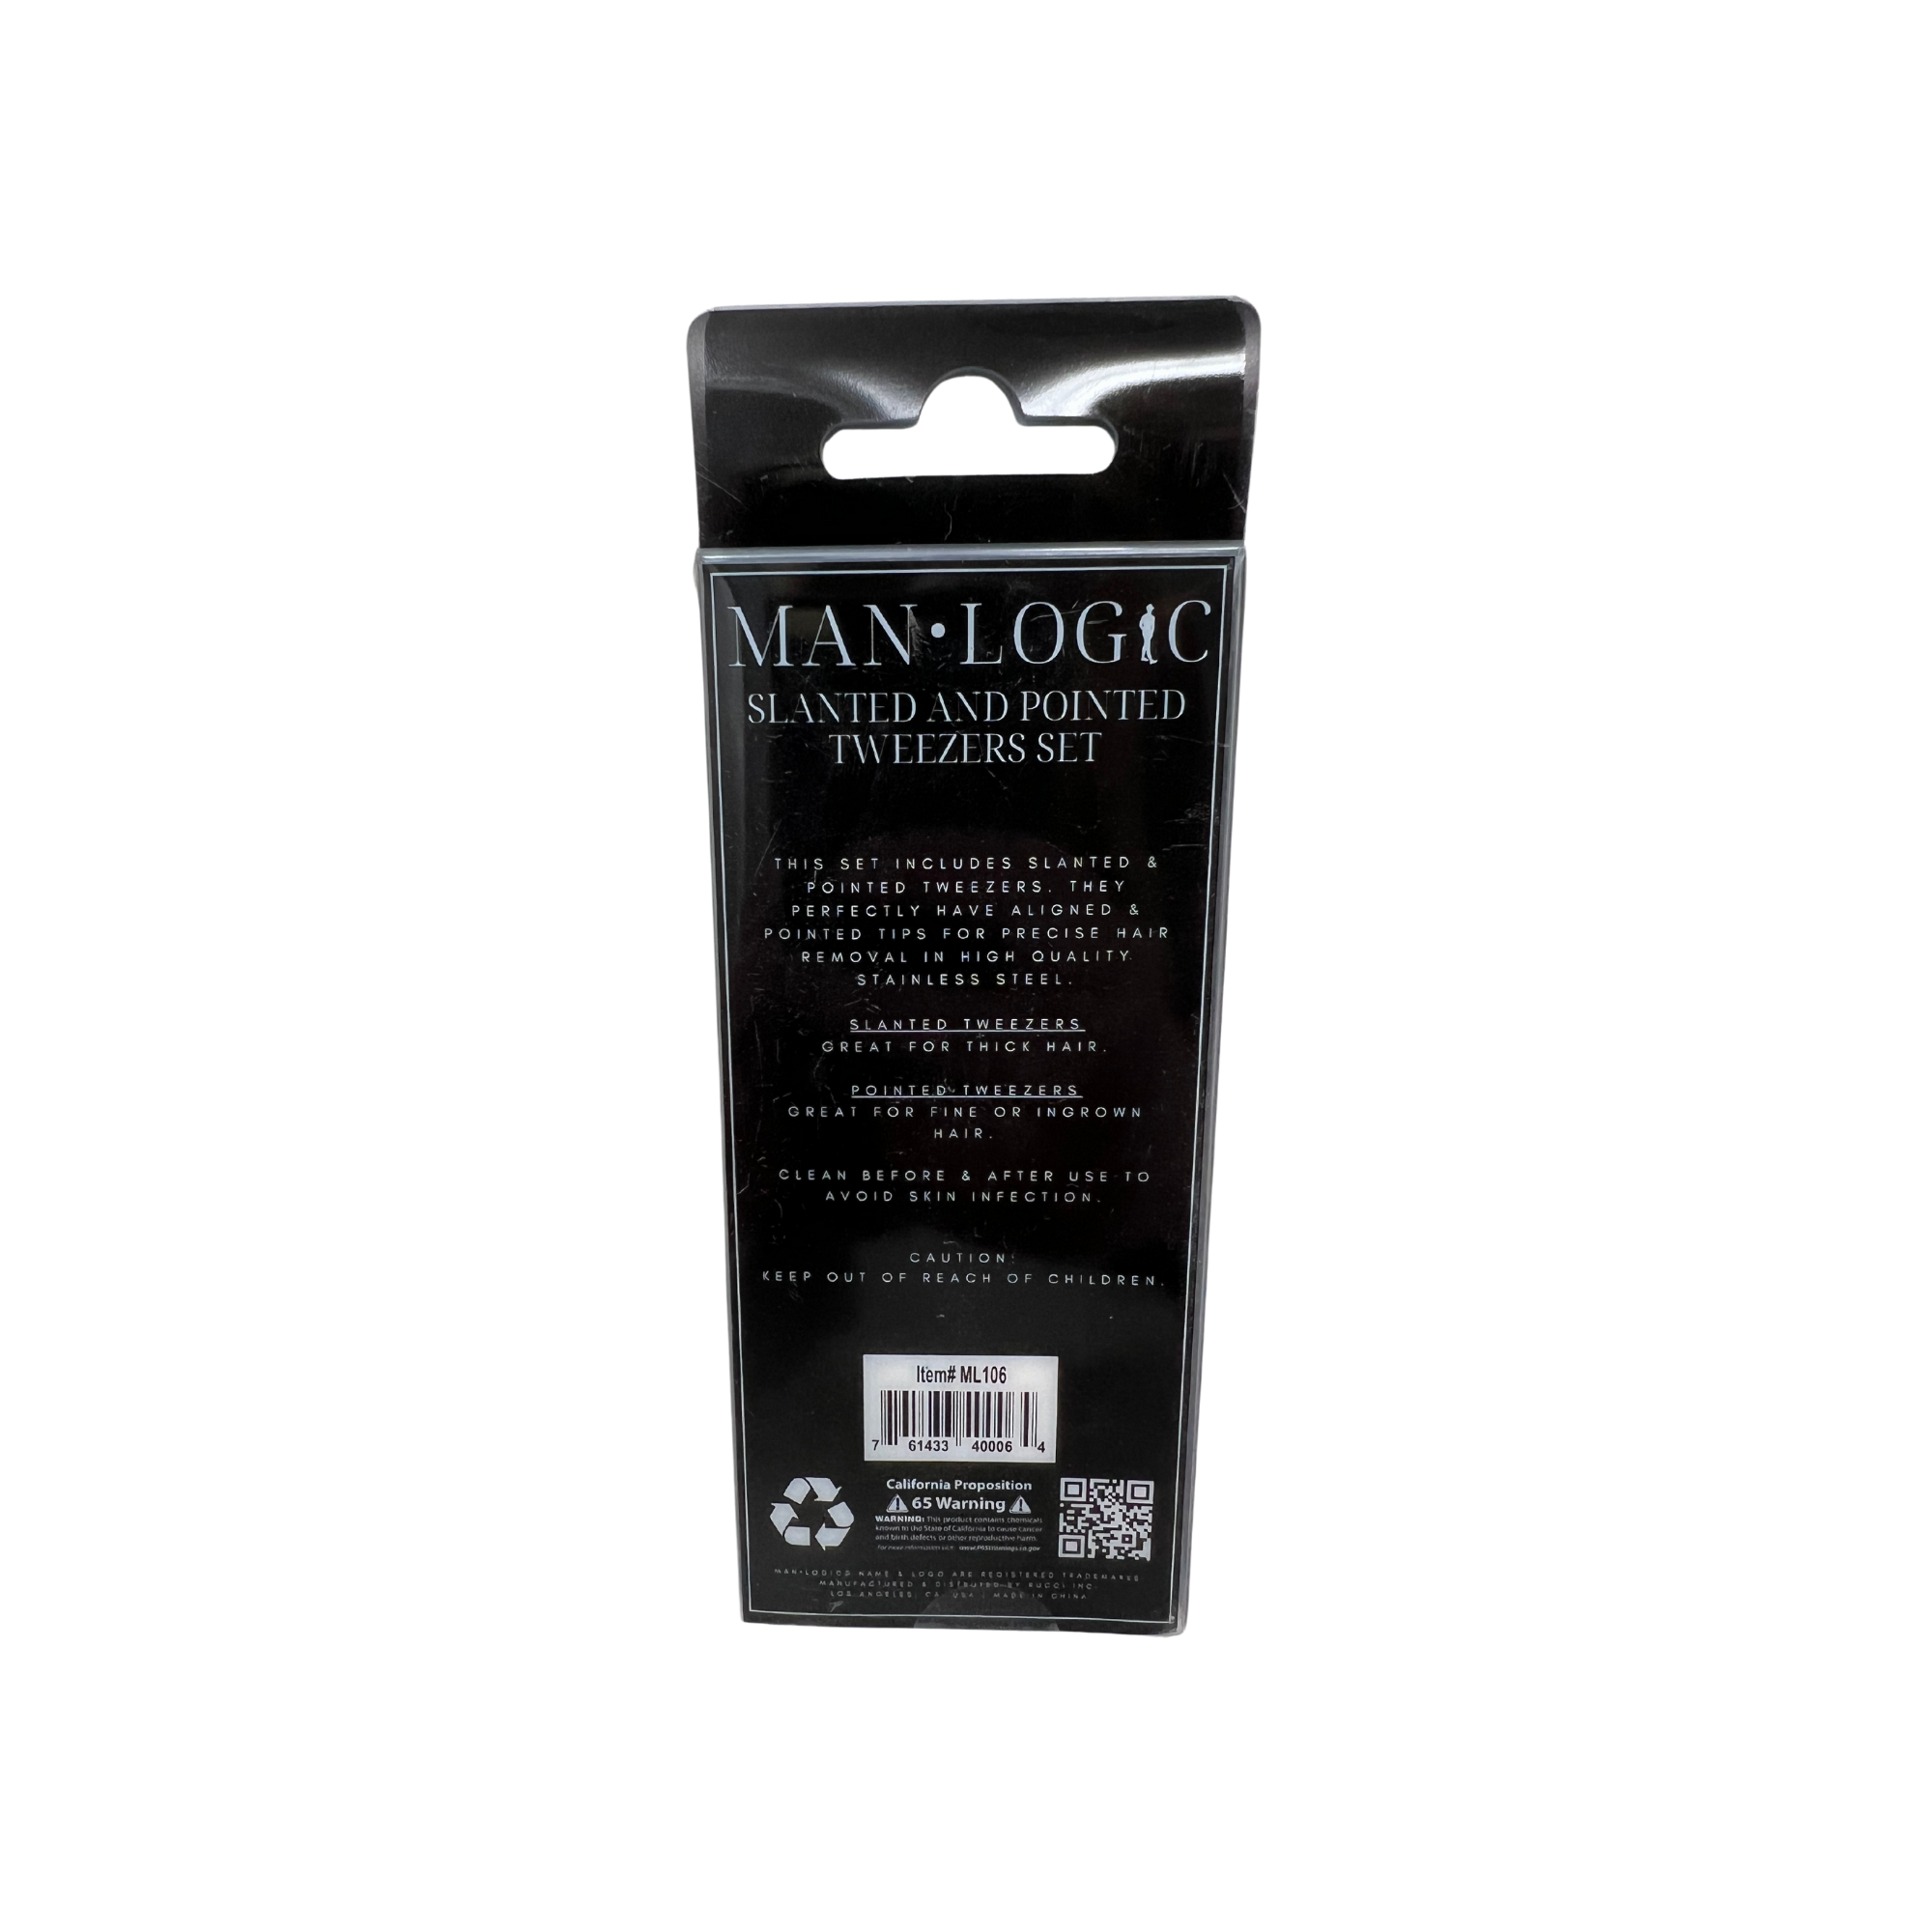 Clearance - Manlogic 2 pcs. Tweezers (ML106)